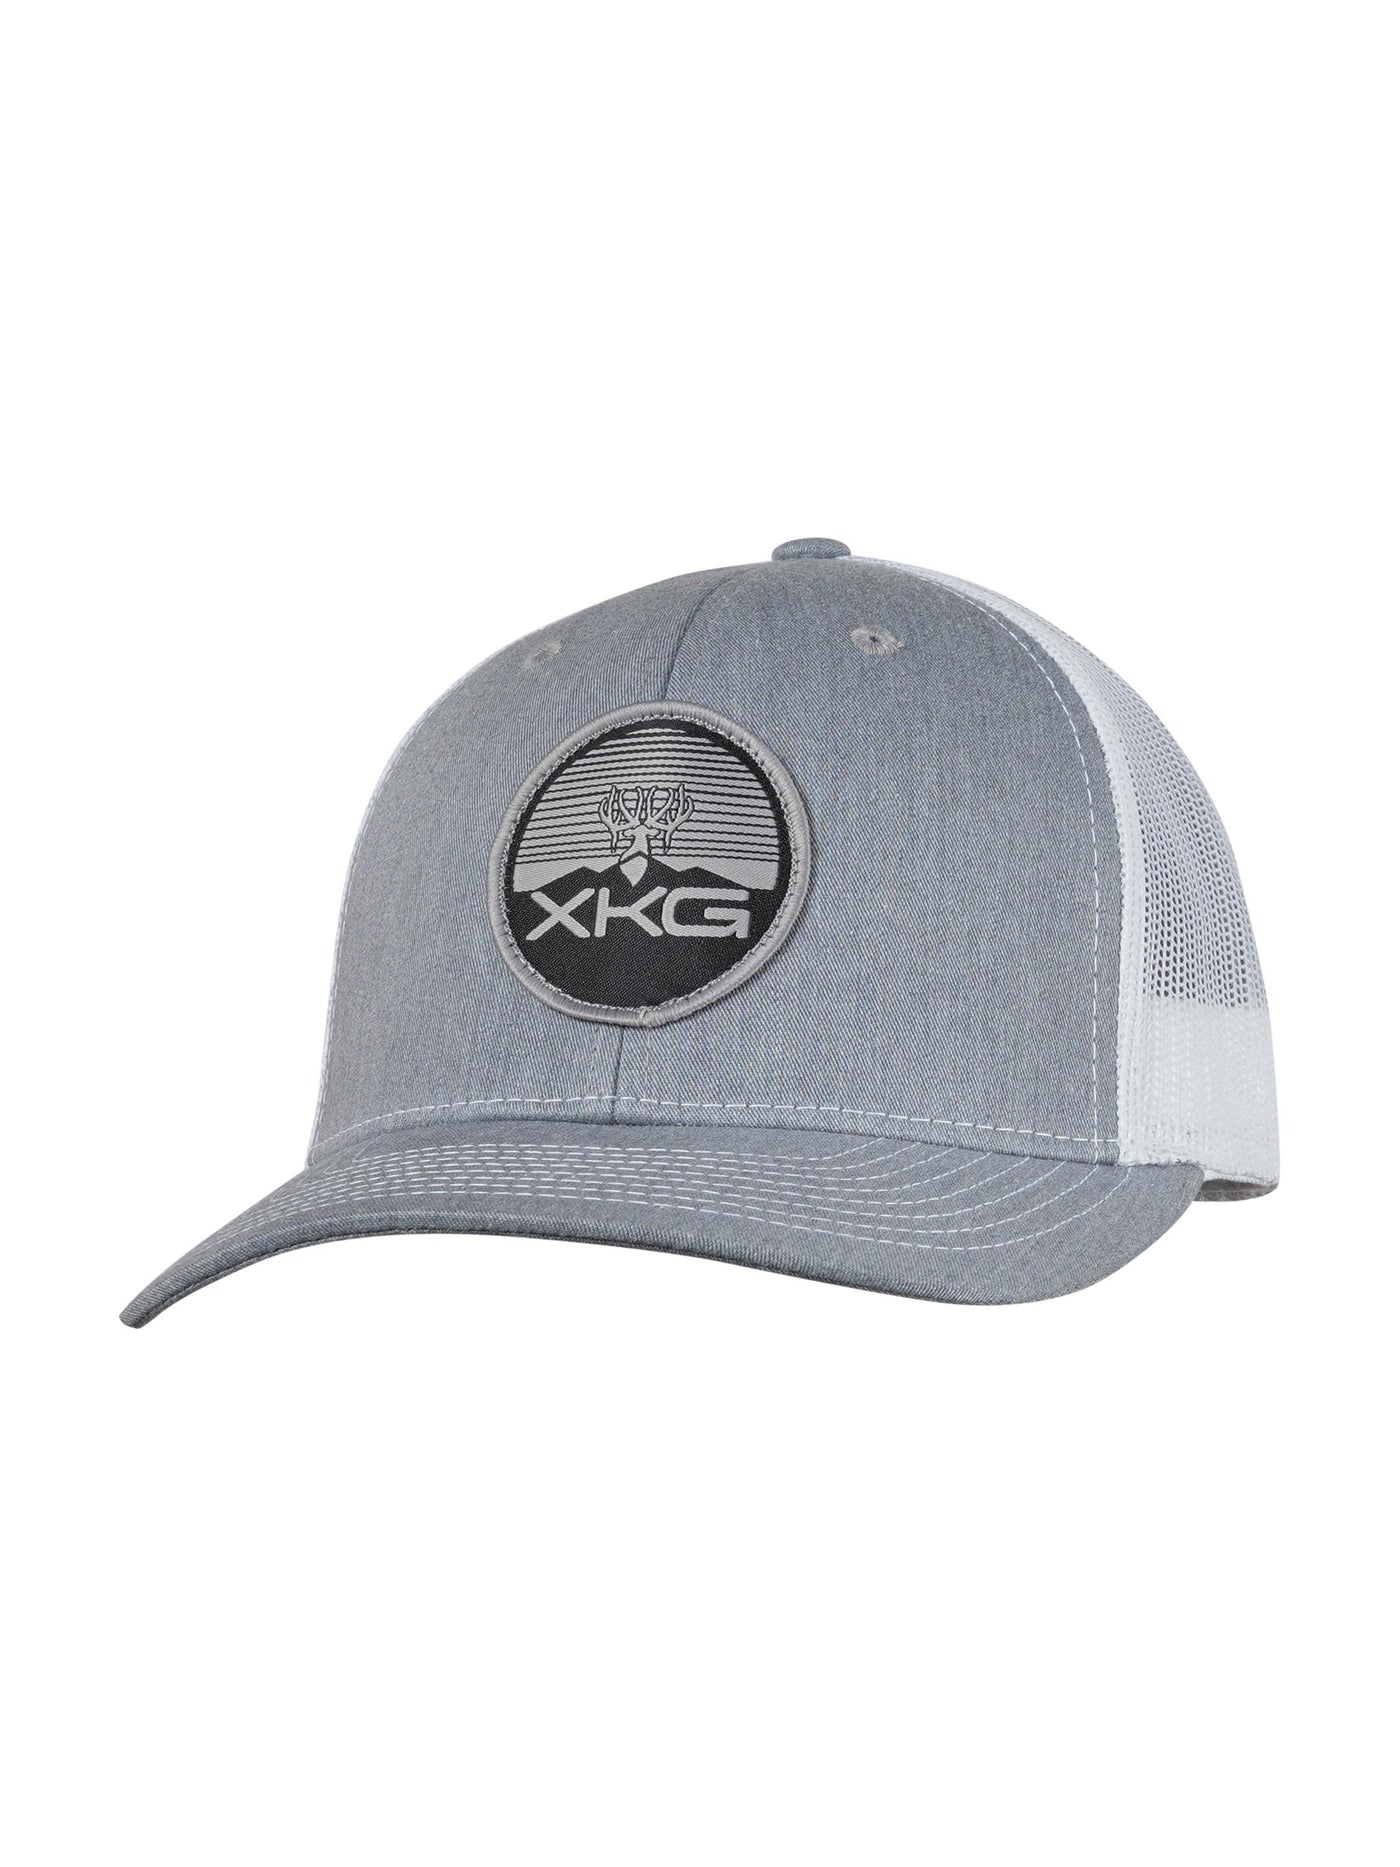 King's XKG Logo Patch Hat | Corbotras lochi